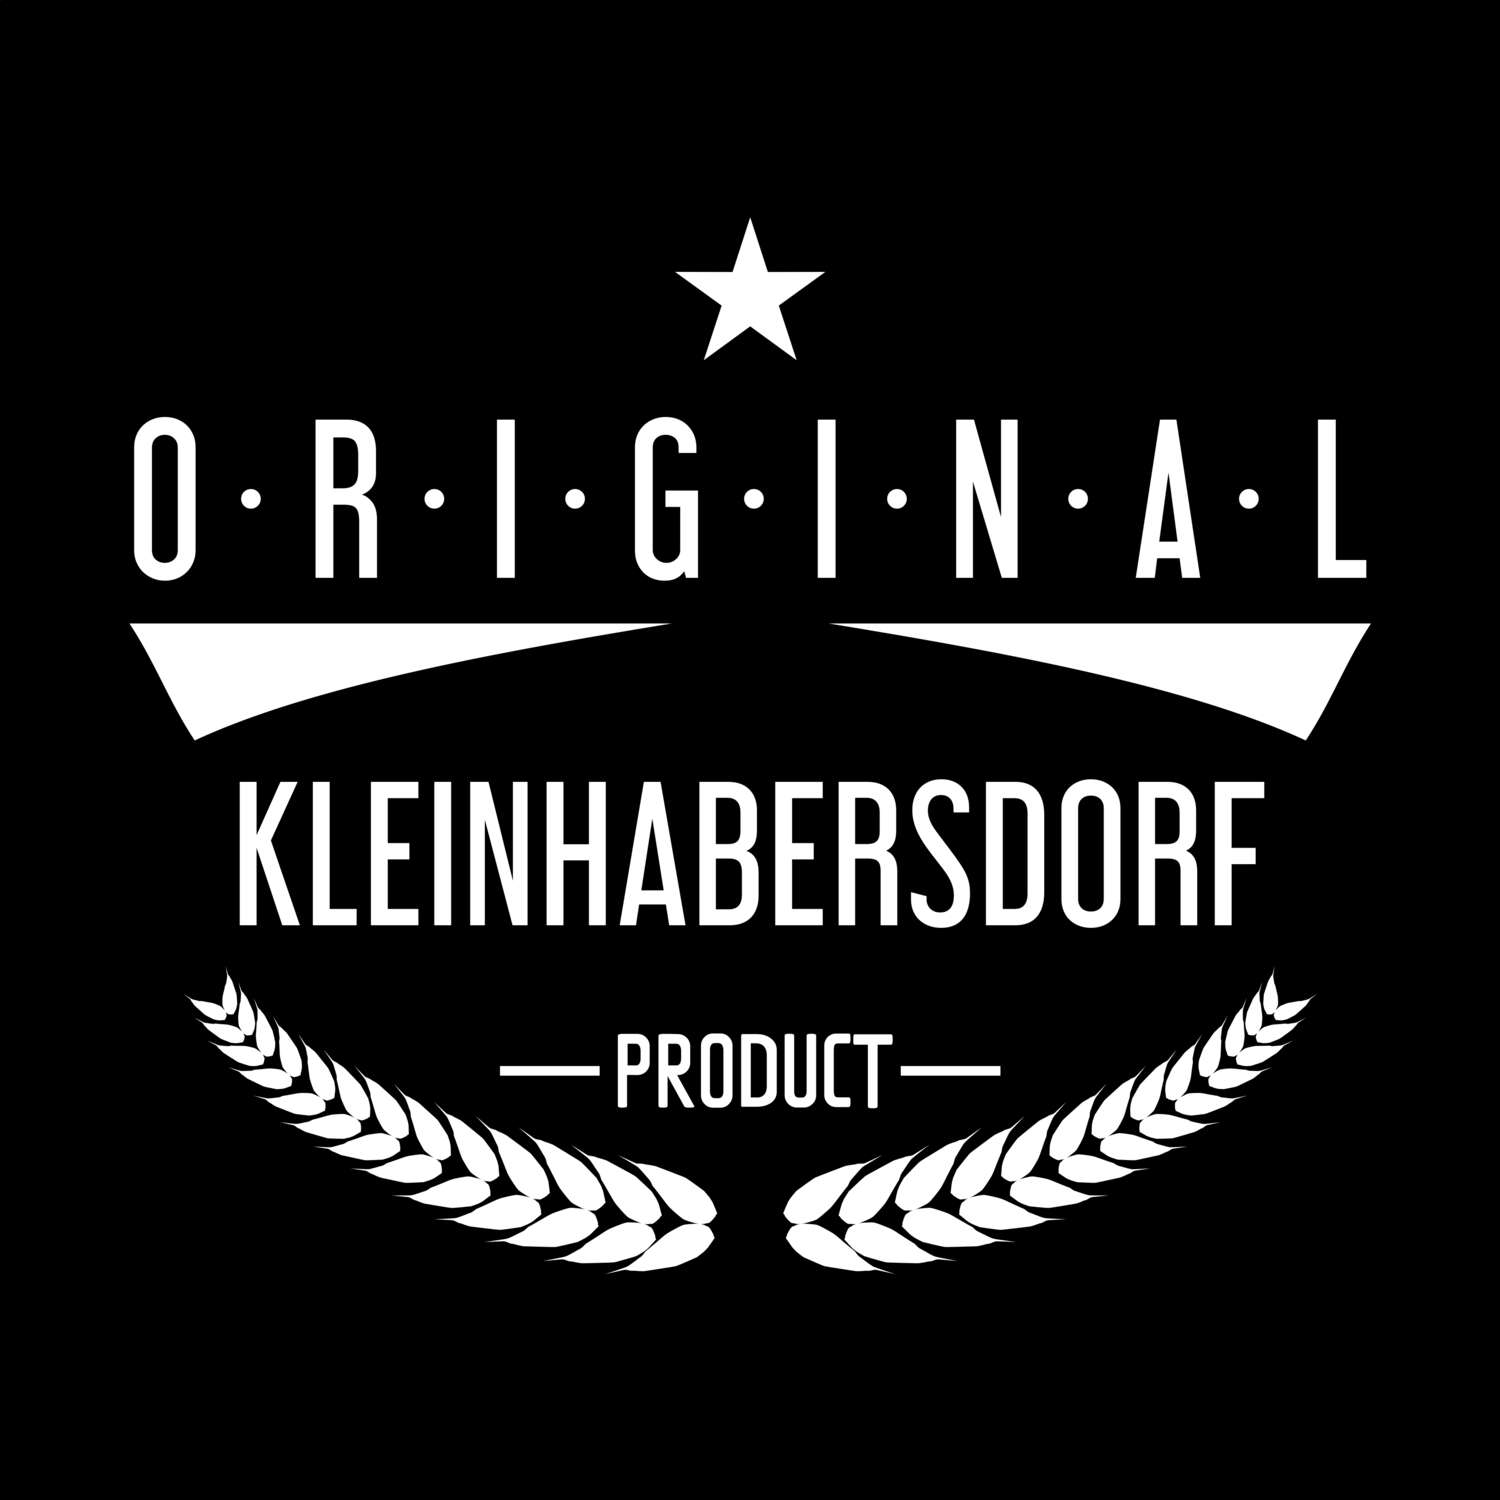 Kleinhabersdorf T-Shirt »Original Product«